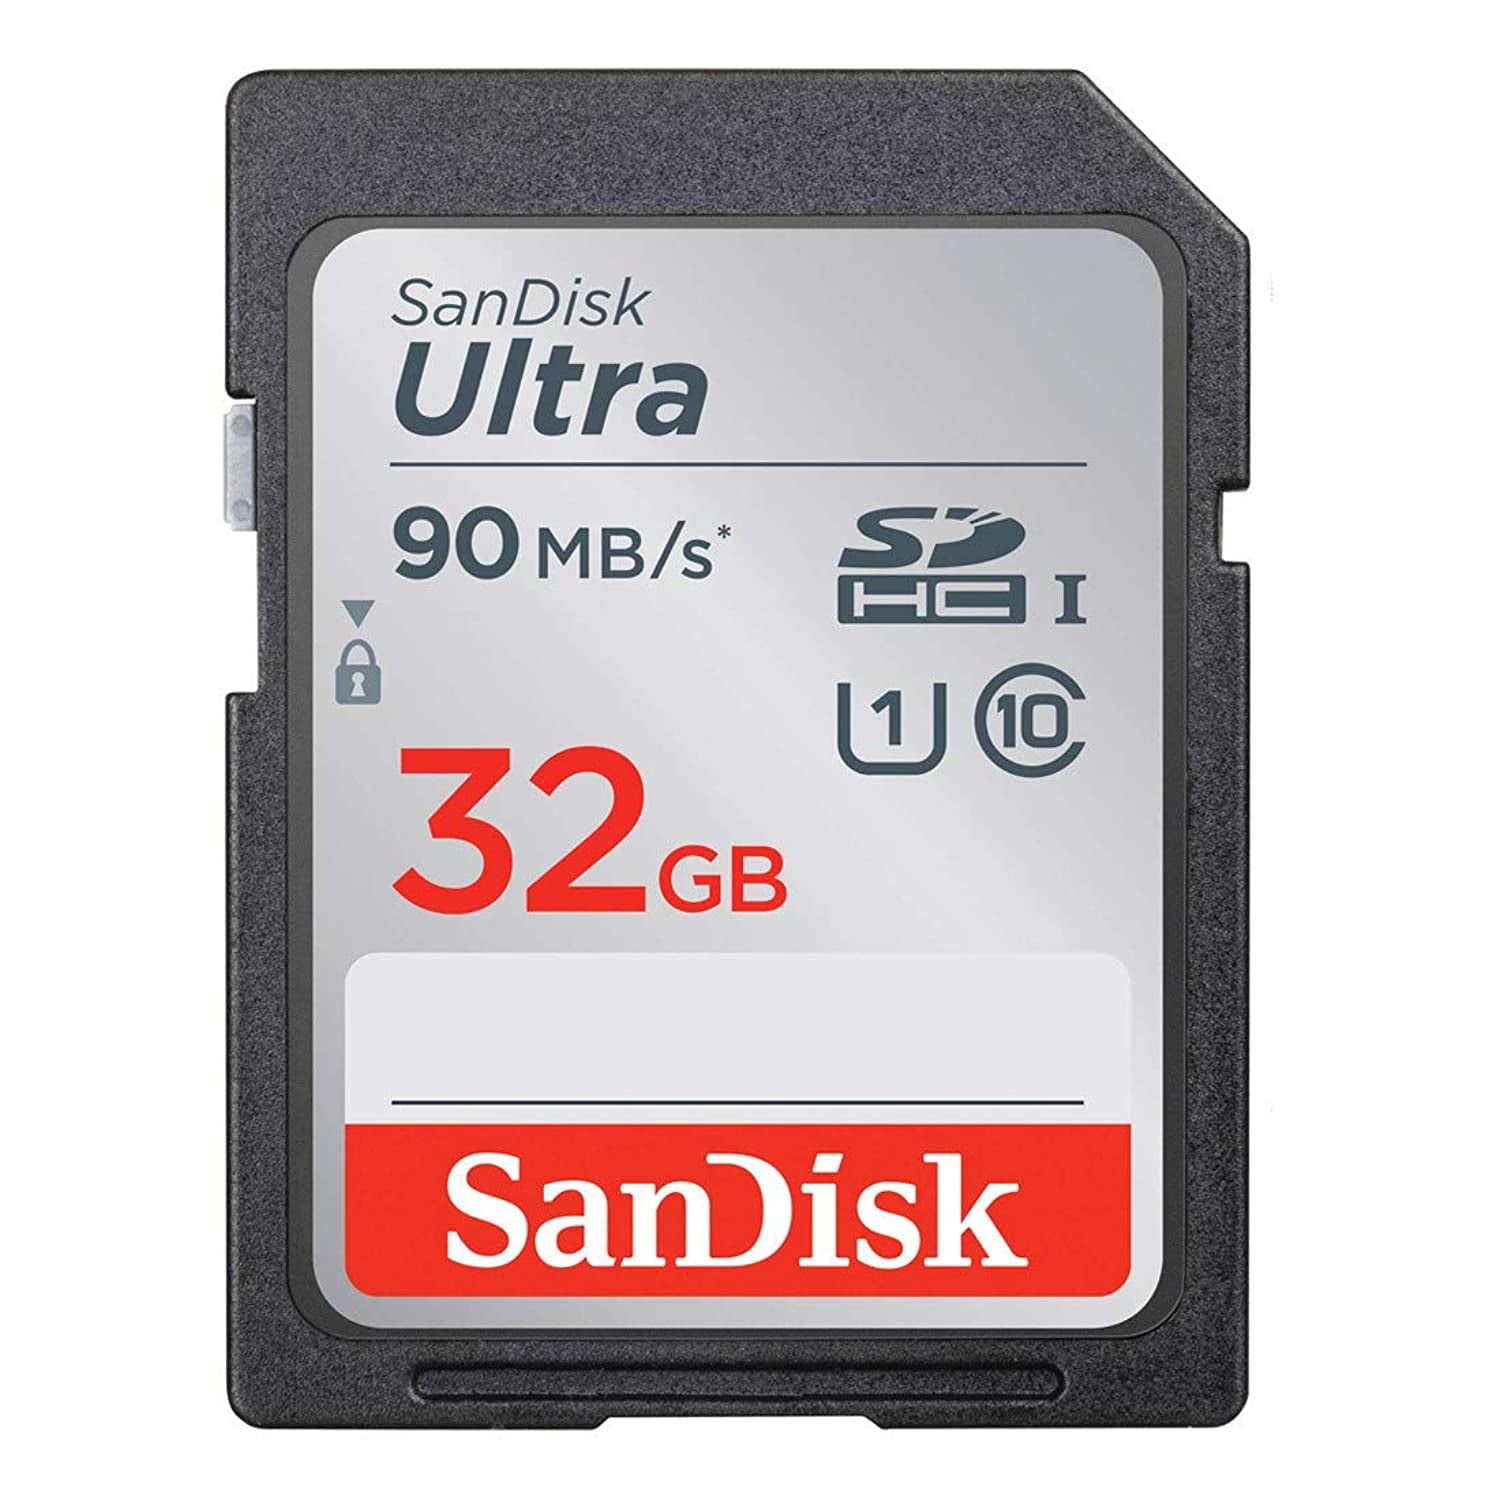 Rynke panden missil slot SanDisk 32GB Ultra SDHC UHS-I Memory Card - 90MB/s, C10, U1, Full HD, SD  Card - SDSDUNR-032G-GN6IN - Walmart.com